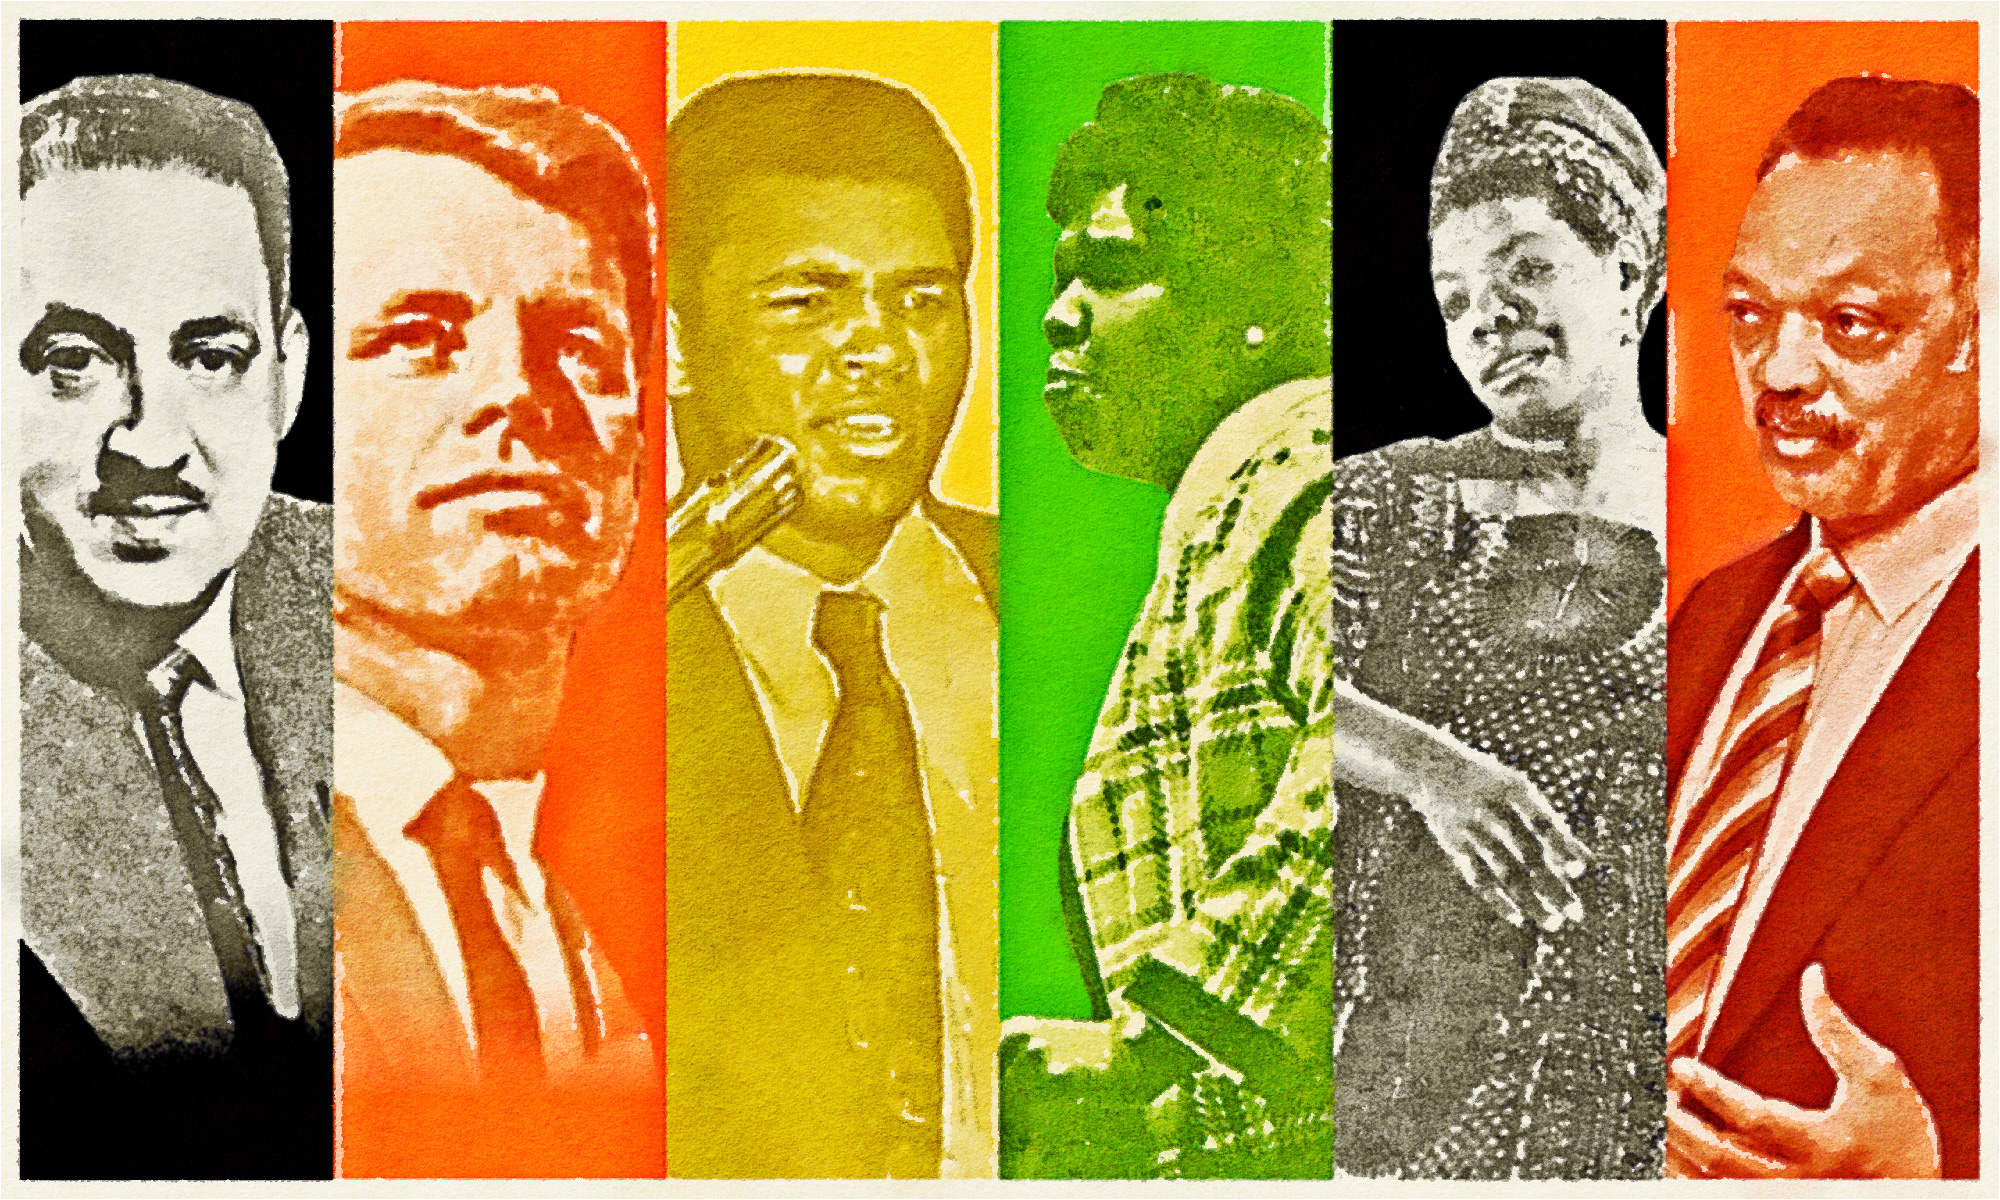 A photo illustration of six historical figures: Thurgood Marshall, Robert Kennedy, Muhammed Ali, Barbara Jordan, Maya Angelou, and Jesse Jackson.